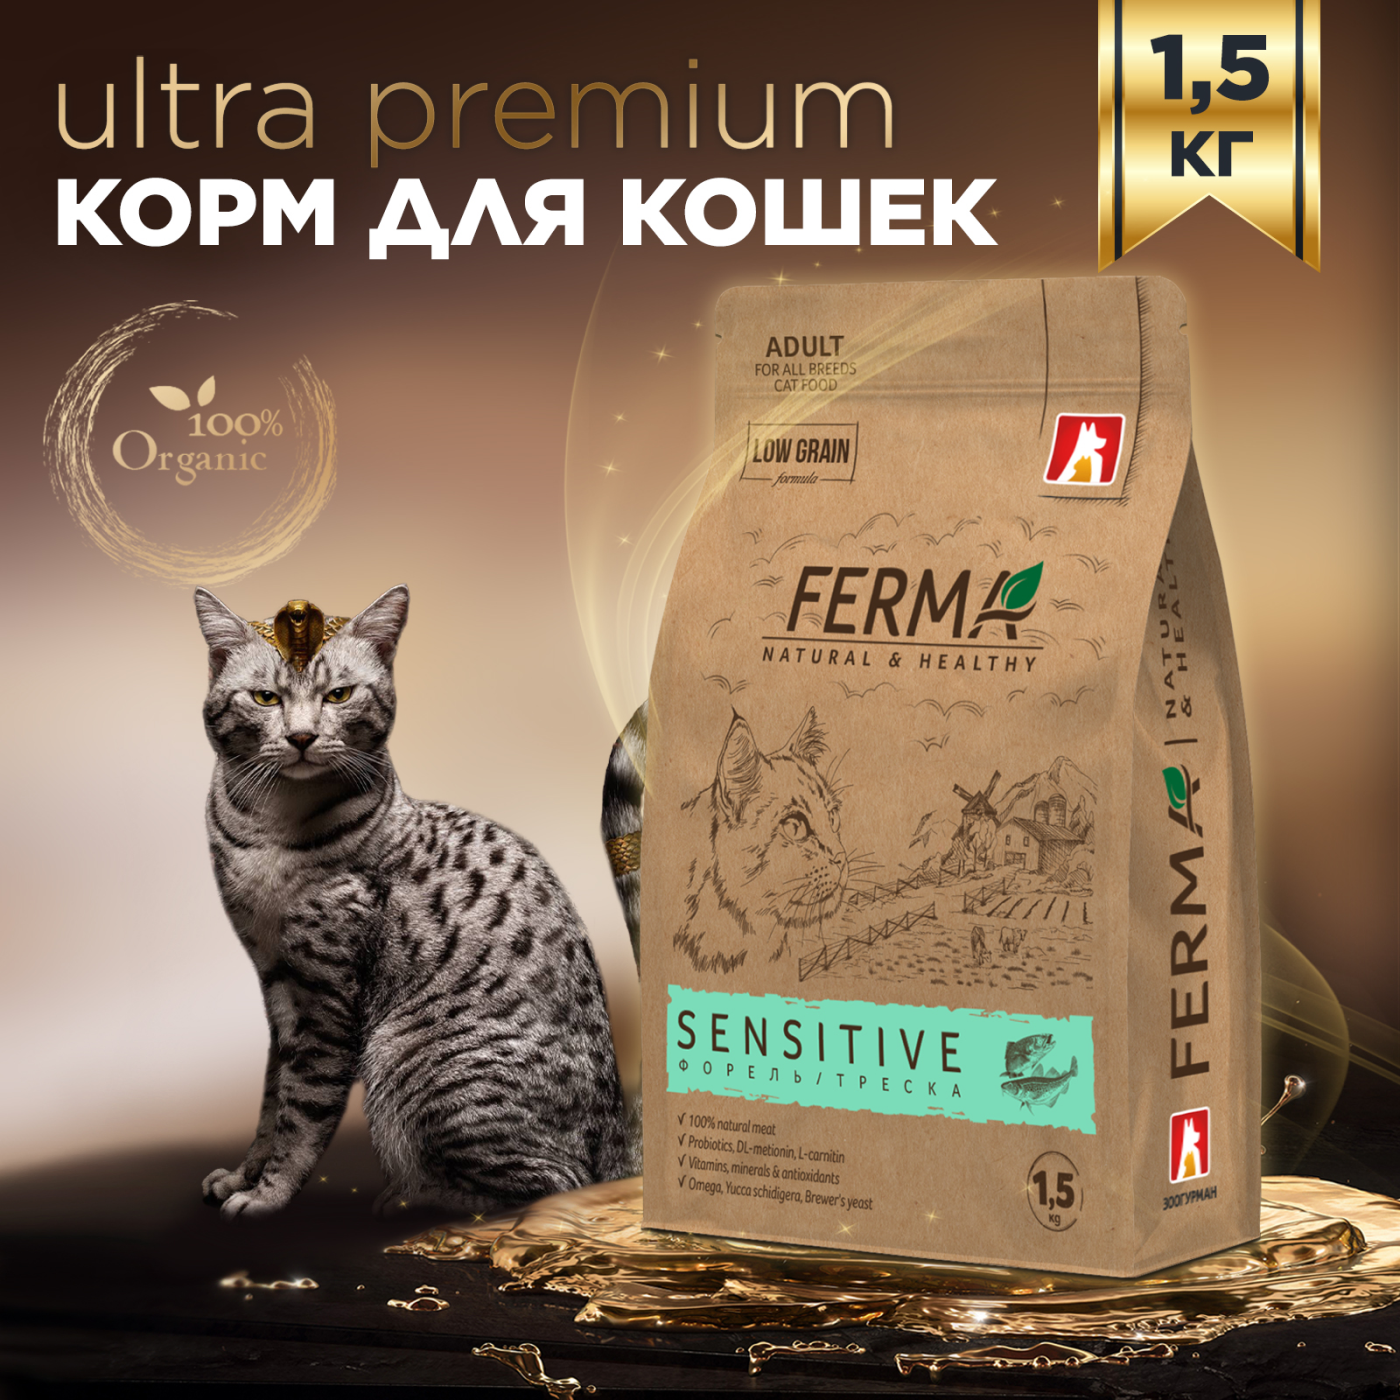 Корм для кошек Зоогурман Ferma Sensitive 1.5кг форель-треска полнорационный сухой - фото 1